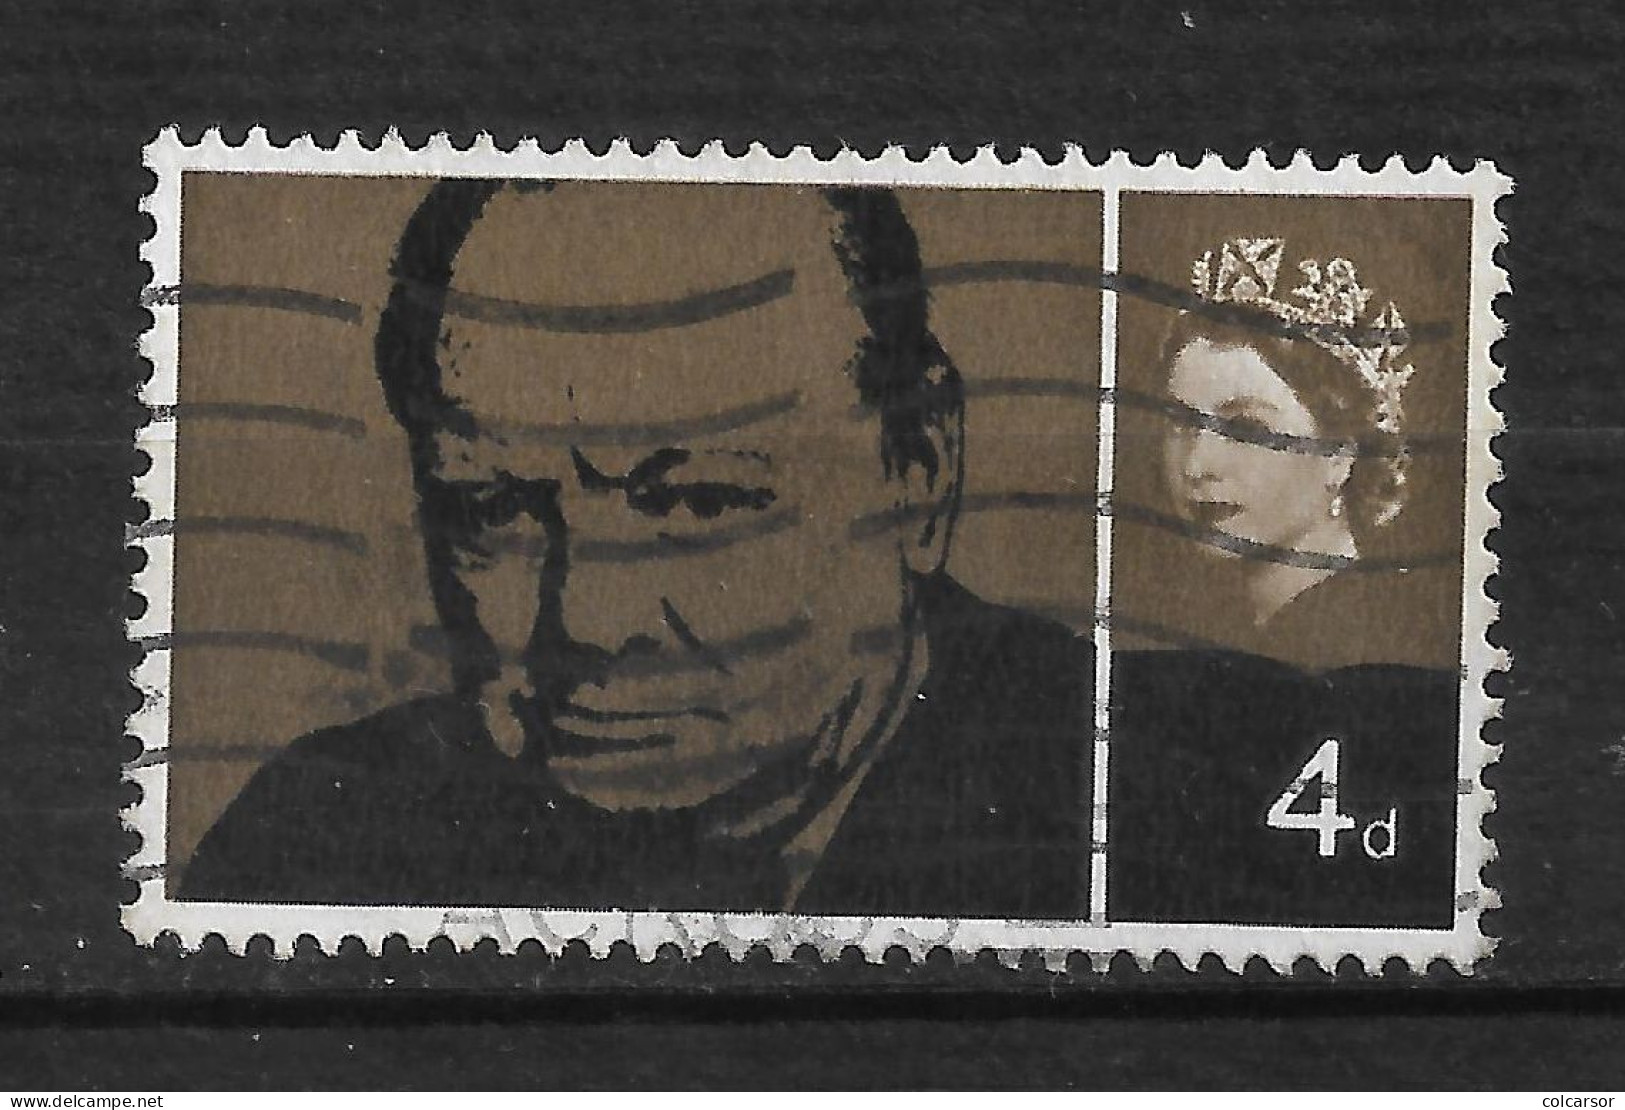 GRANDE  BRETAGNE " N° 397 " CHURCHILL" - Used Stamps